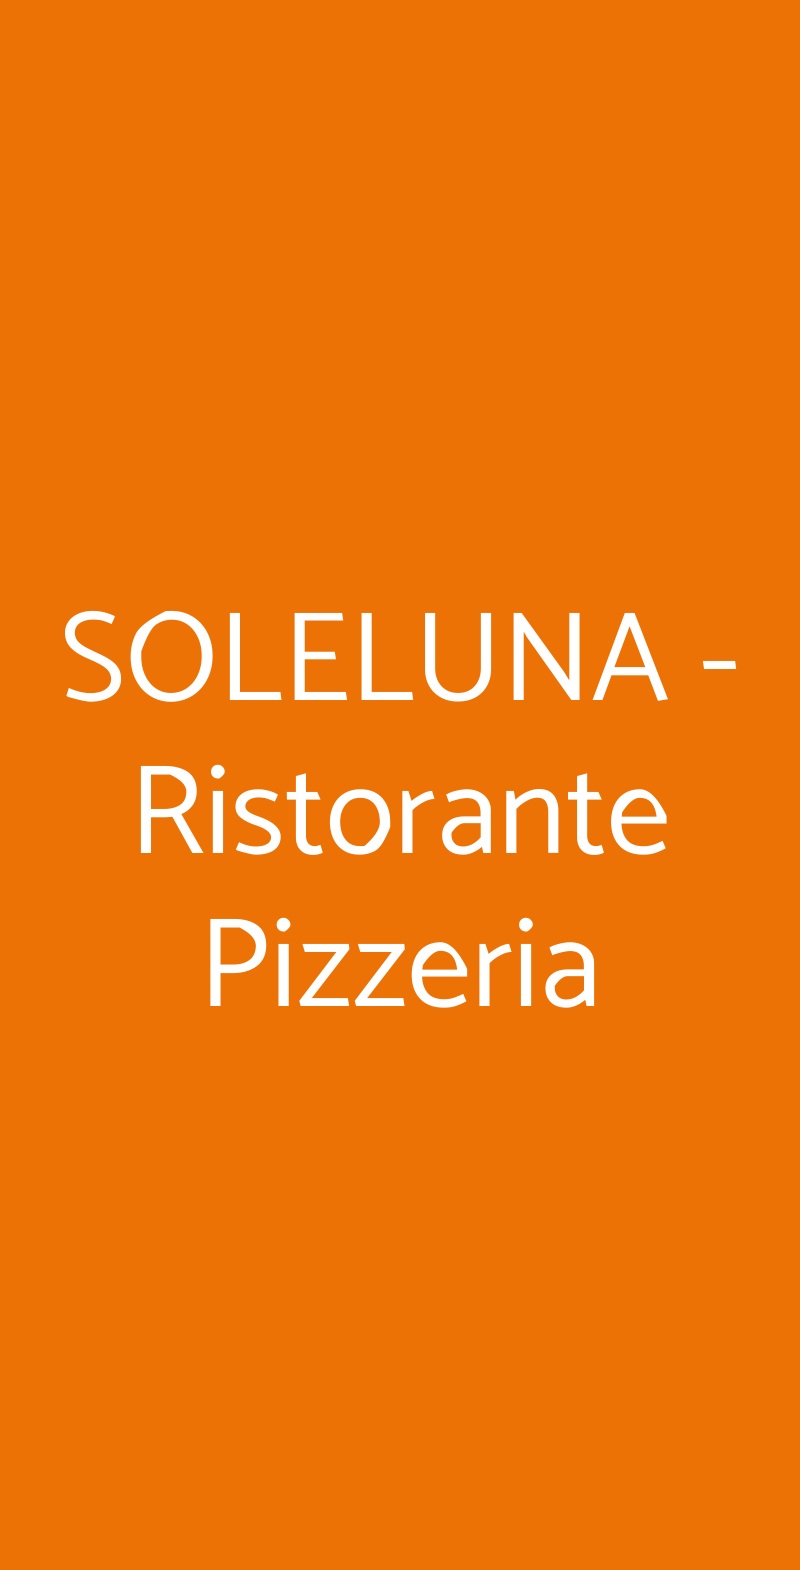 SOLELUNA - Ristorante Pizzeria Tortona menù 1 pagina